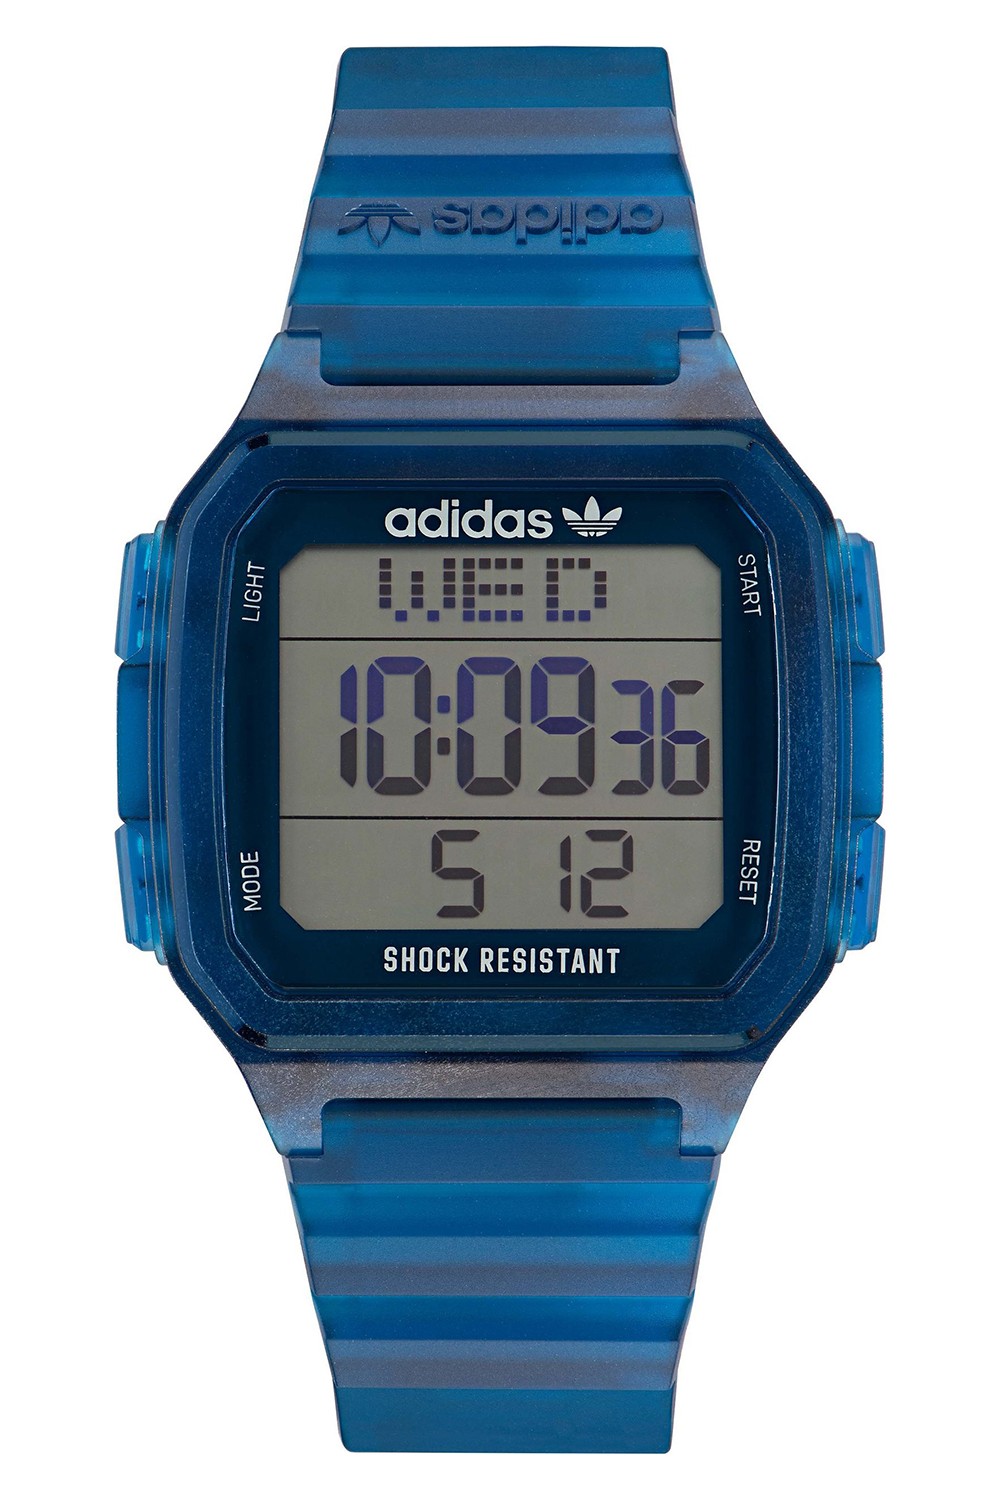 unisex GMT One Digital Rubber Originals Adidas Watch AOST22552 online AOST22552 Adidas unisex Men\'s Watch Barato Adidas Comprar | Digital Clicktime.eu» Comprar Watch One Blue GMT Blue Watch Rubber | AOST22552